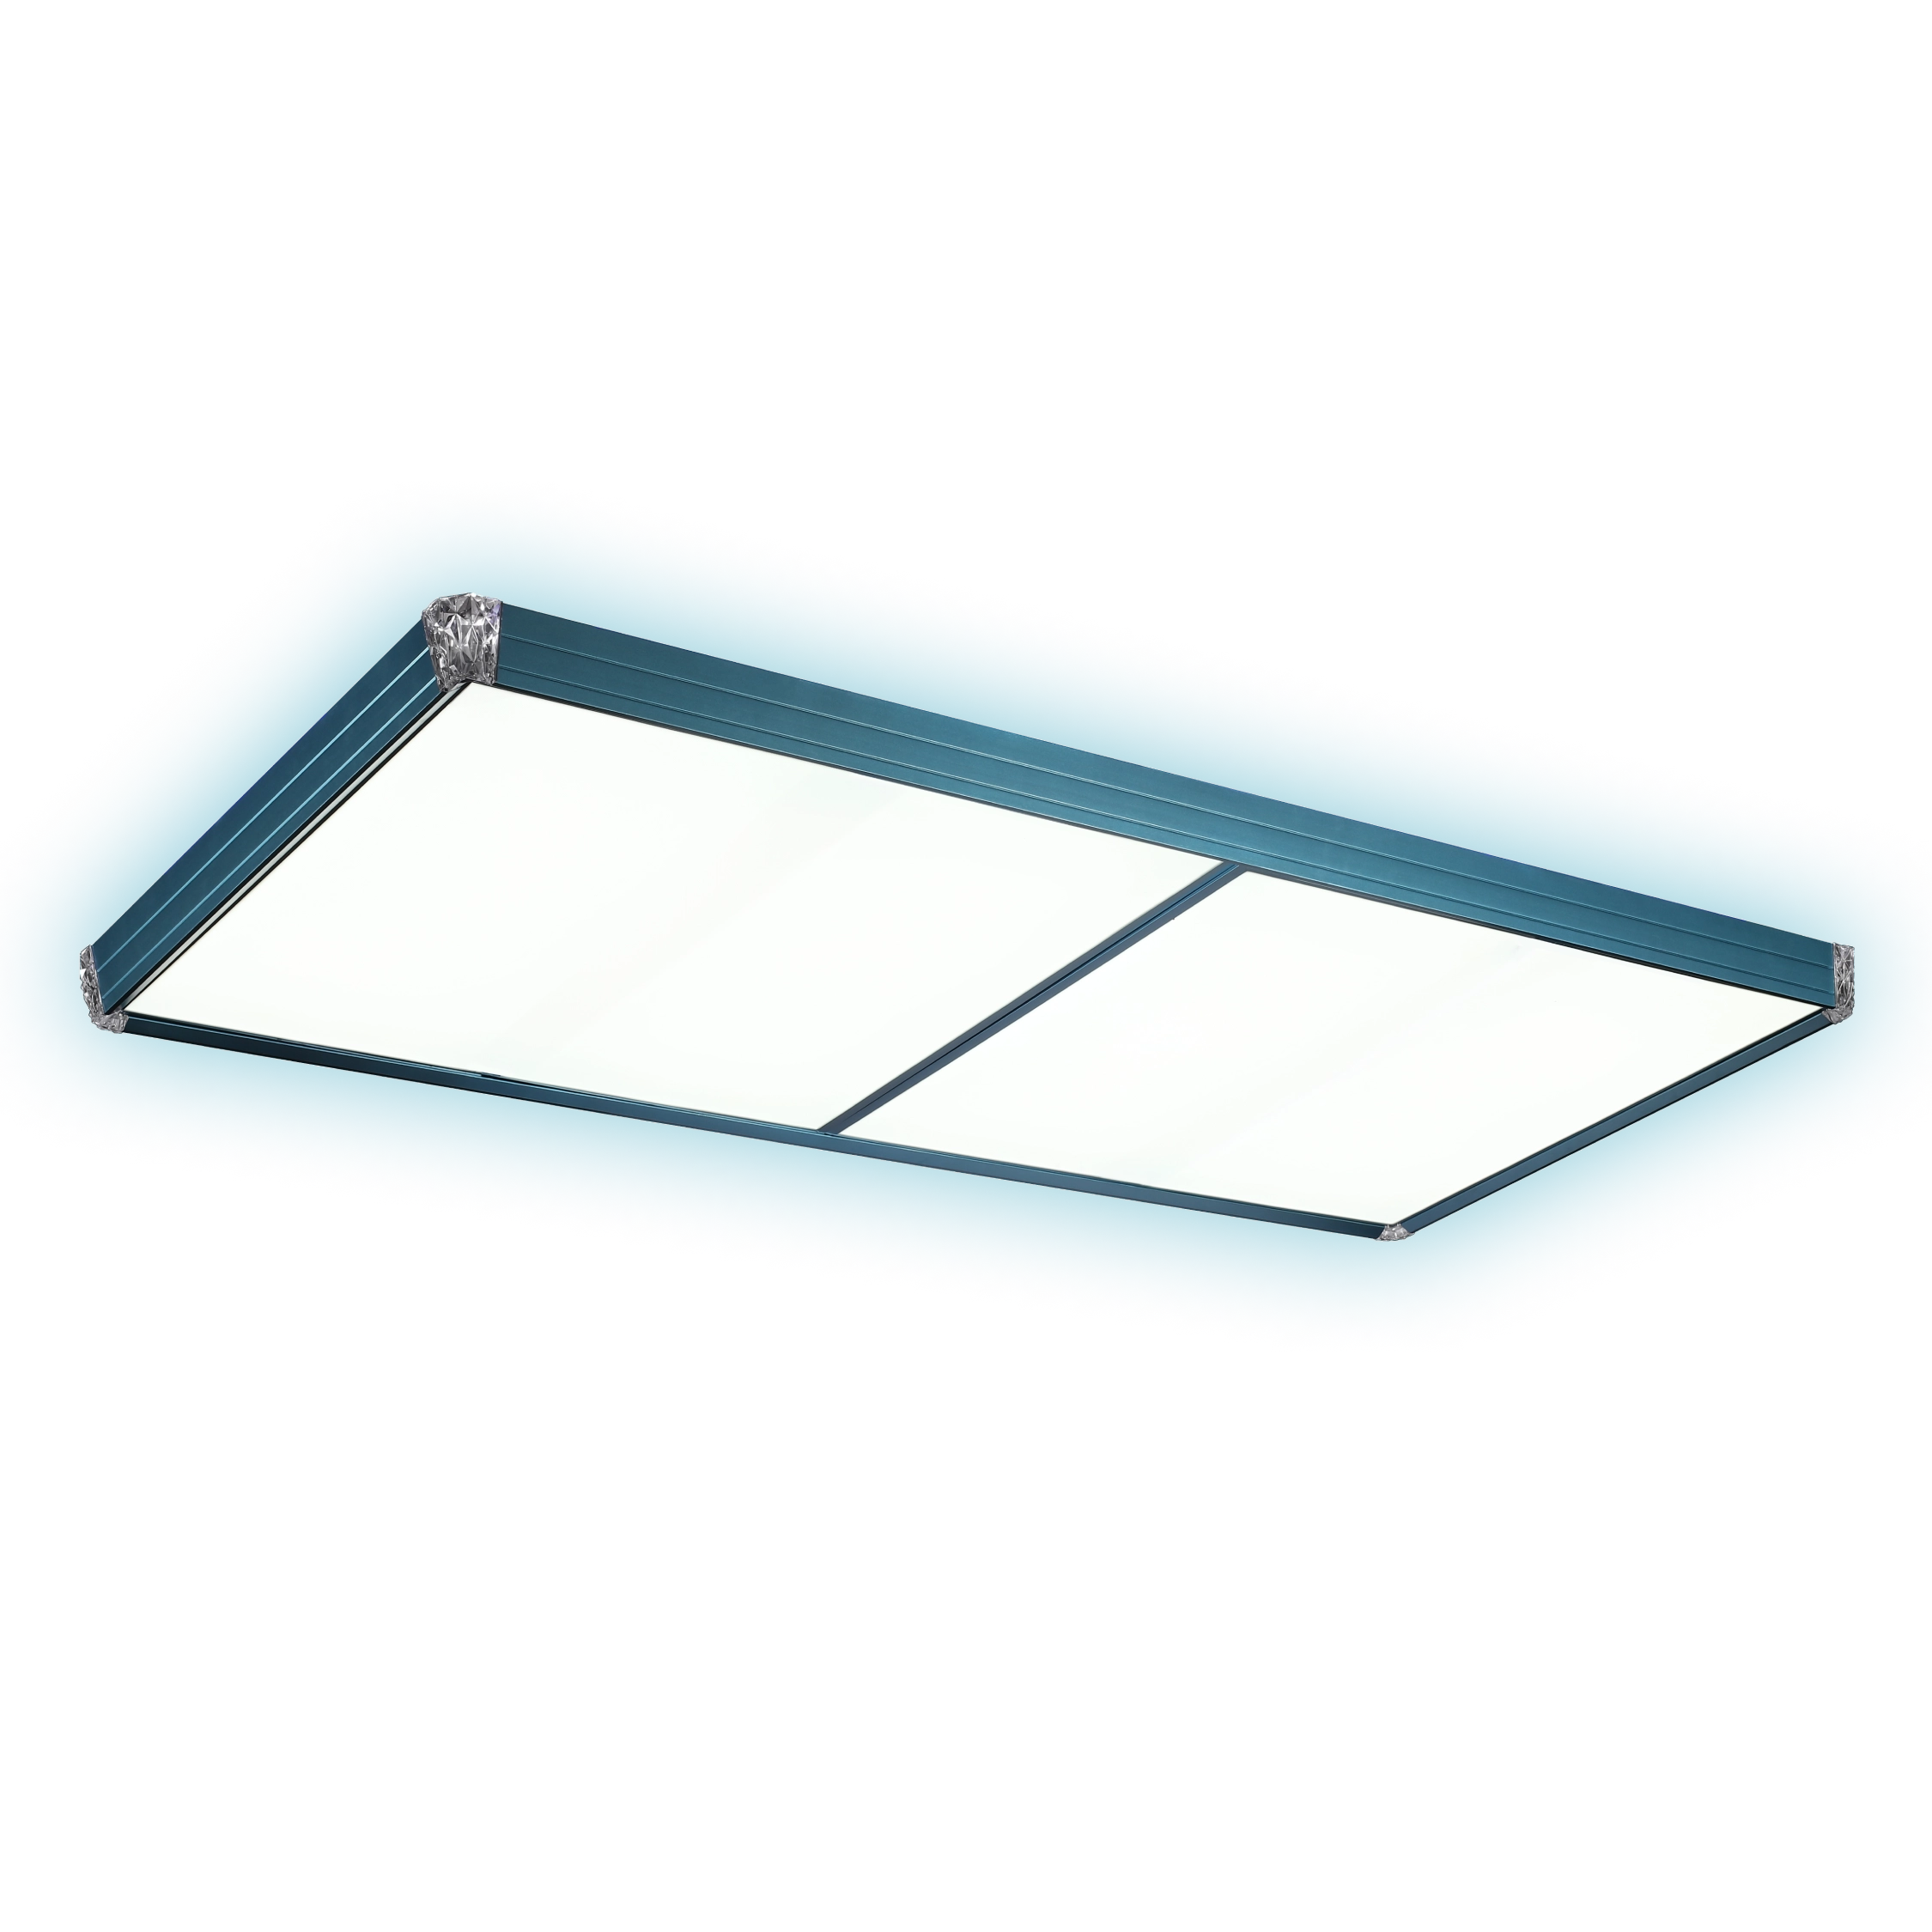 LED BILLIARD LIGHT - H Series H1  -  For 7 FT Pool Table